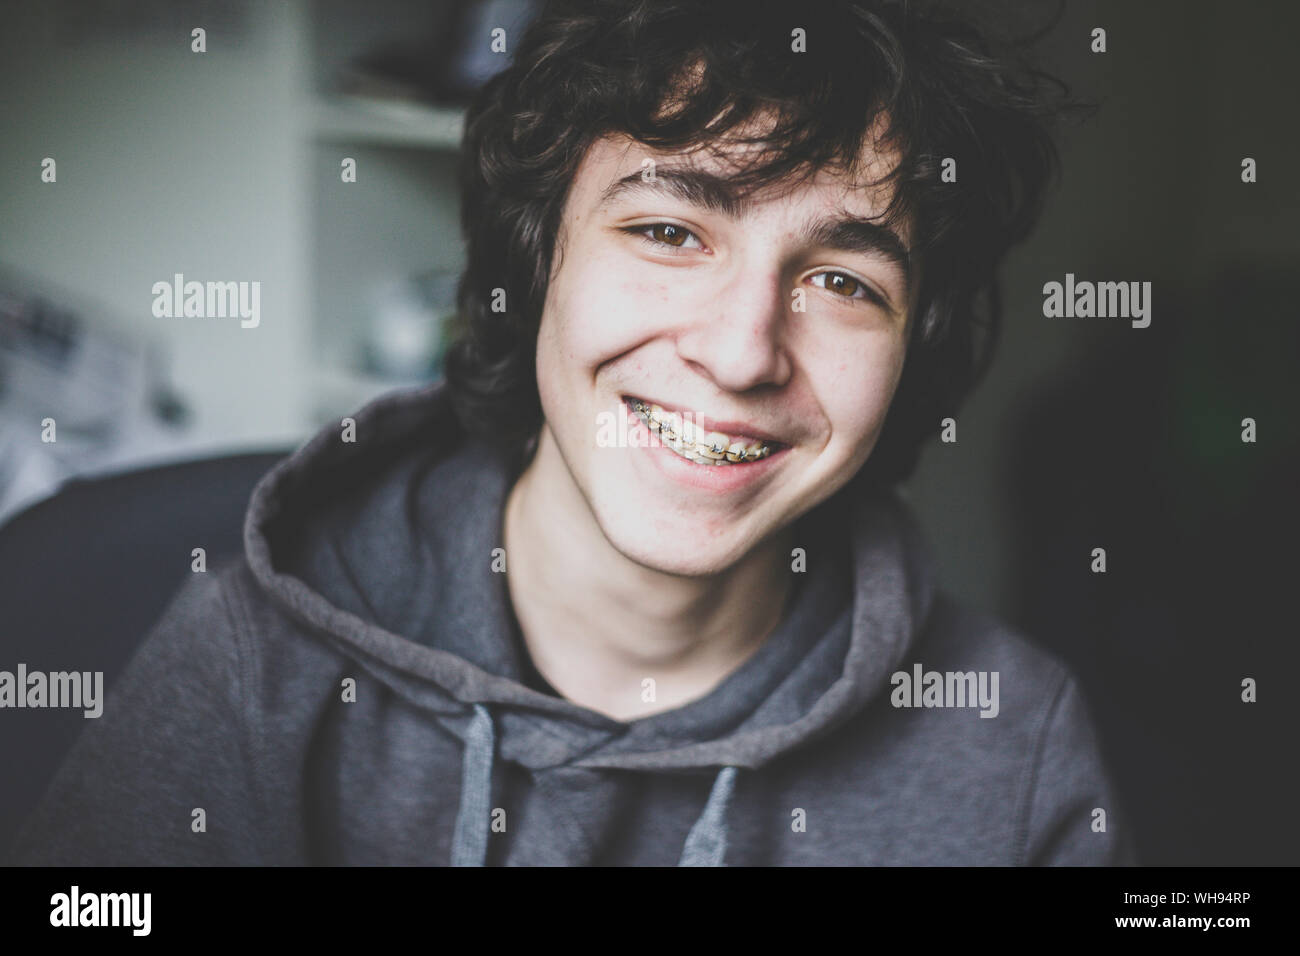 Portrait of smiling teenage boy wearing  braces Stock Photo